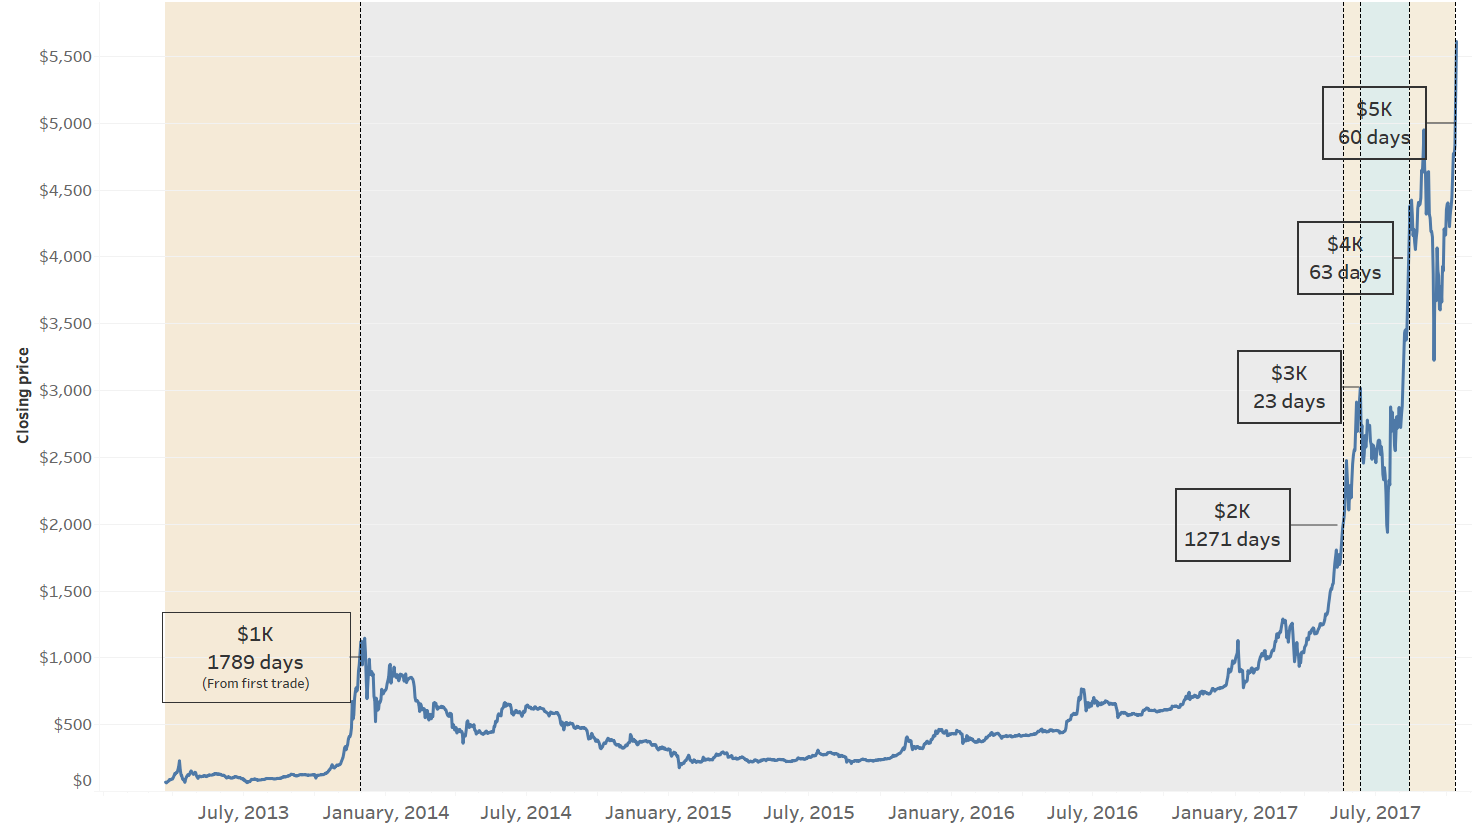 Bitcoin Price Chart History 2017